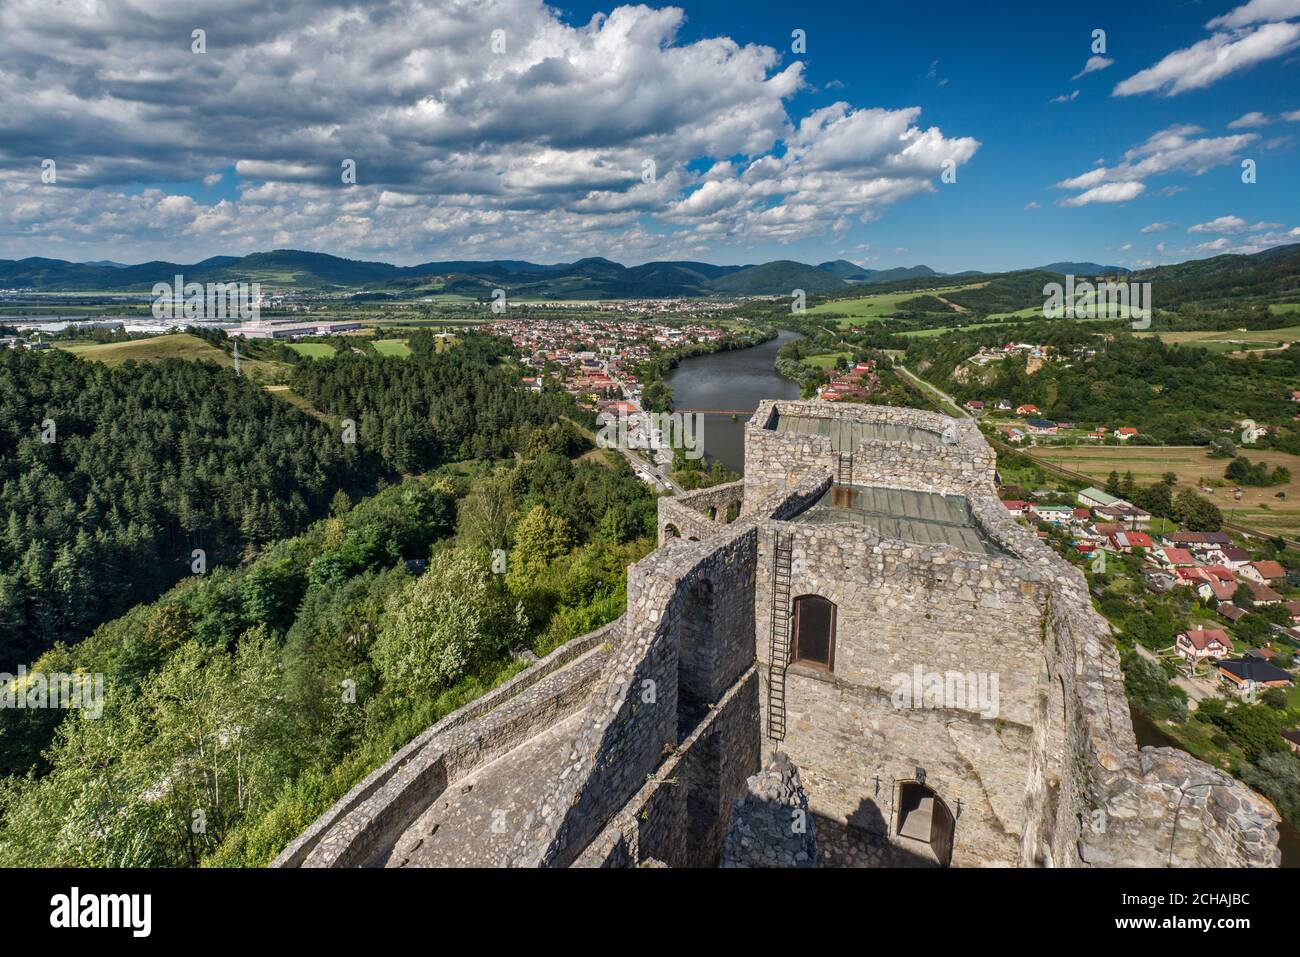 Massif de Kysuska Vrchovina, village de Strecno, vallée de la rivière Vah, vue du château de Strecno, région de Zilina, Slovaquie Banque D'Images